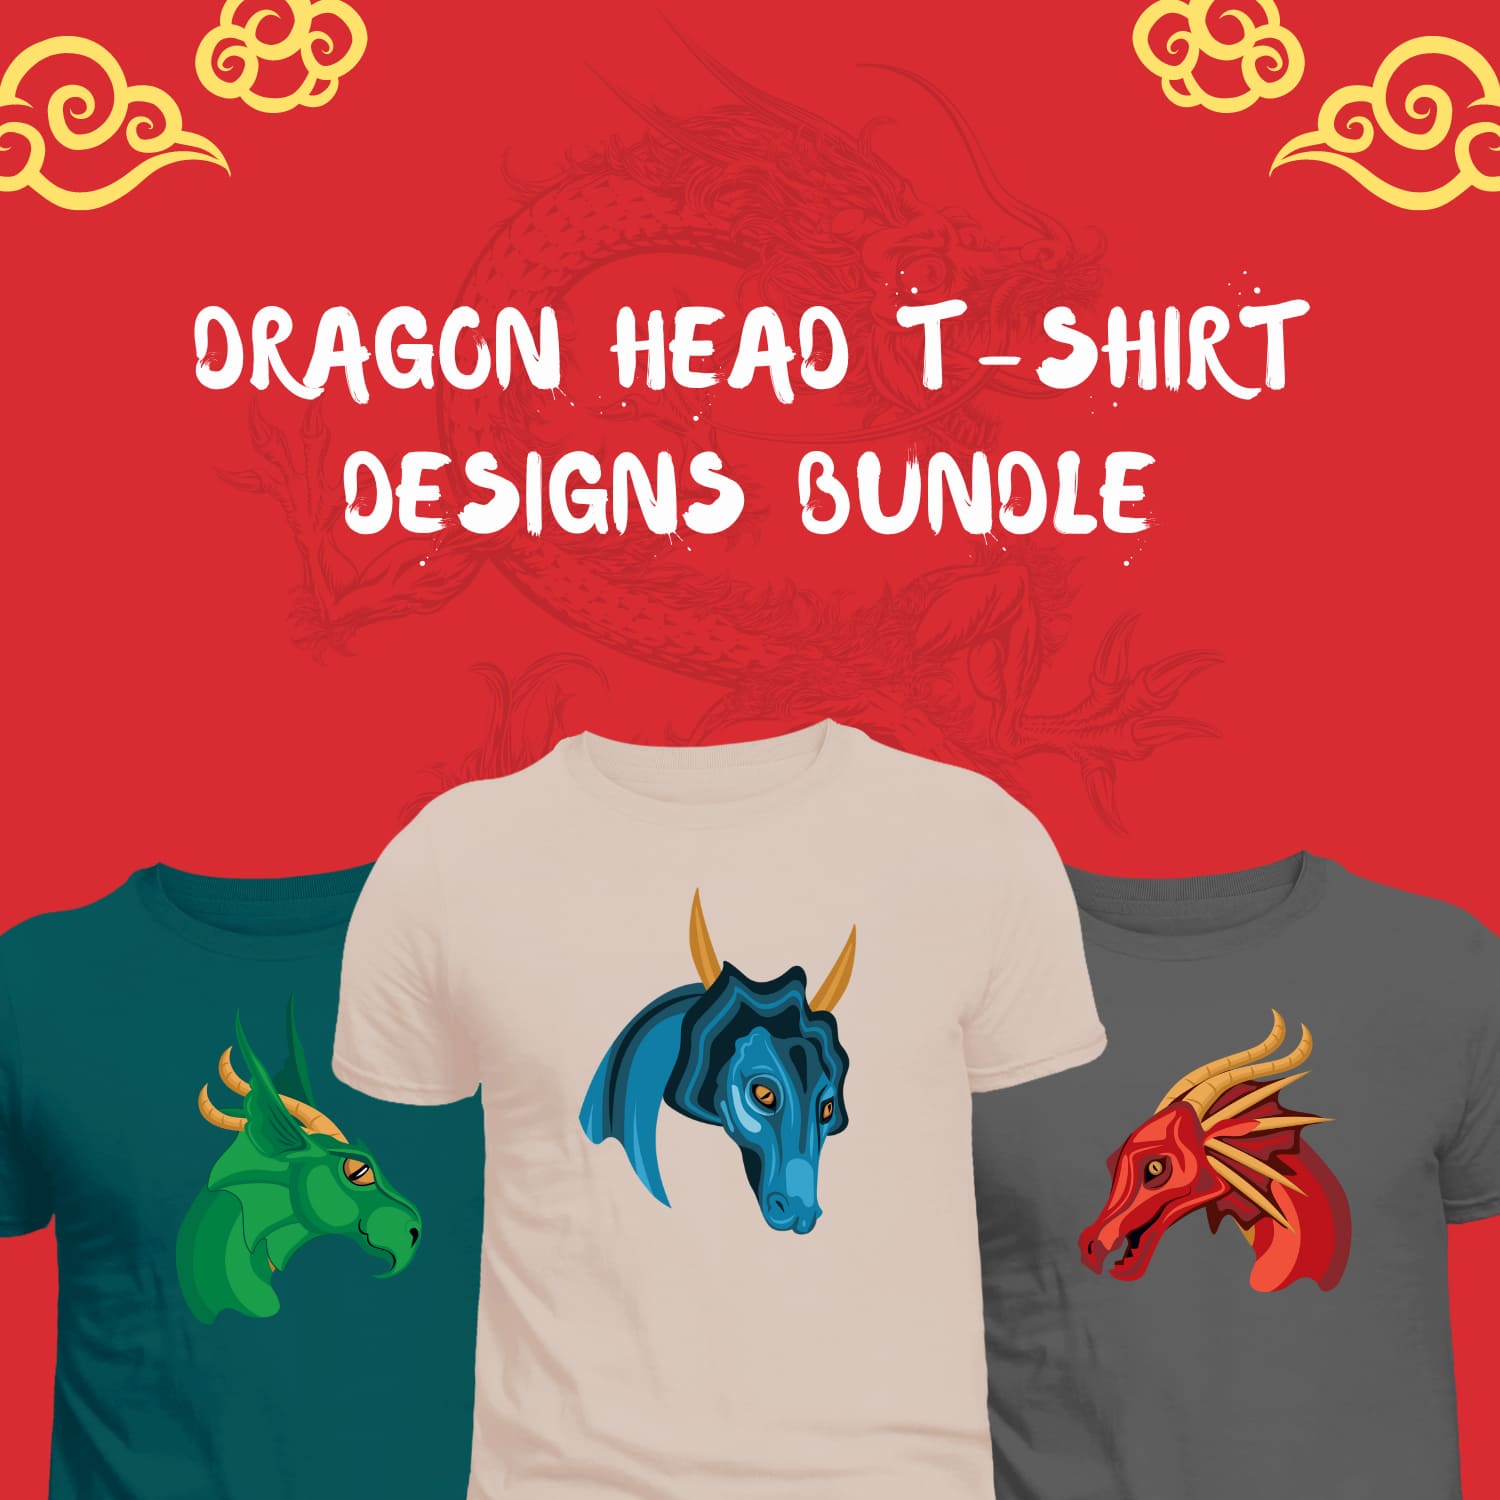 Dragon Head T-shirt Designs Bundle.